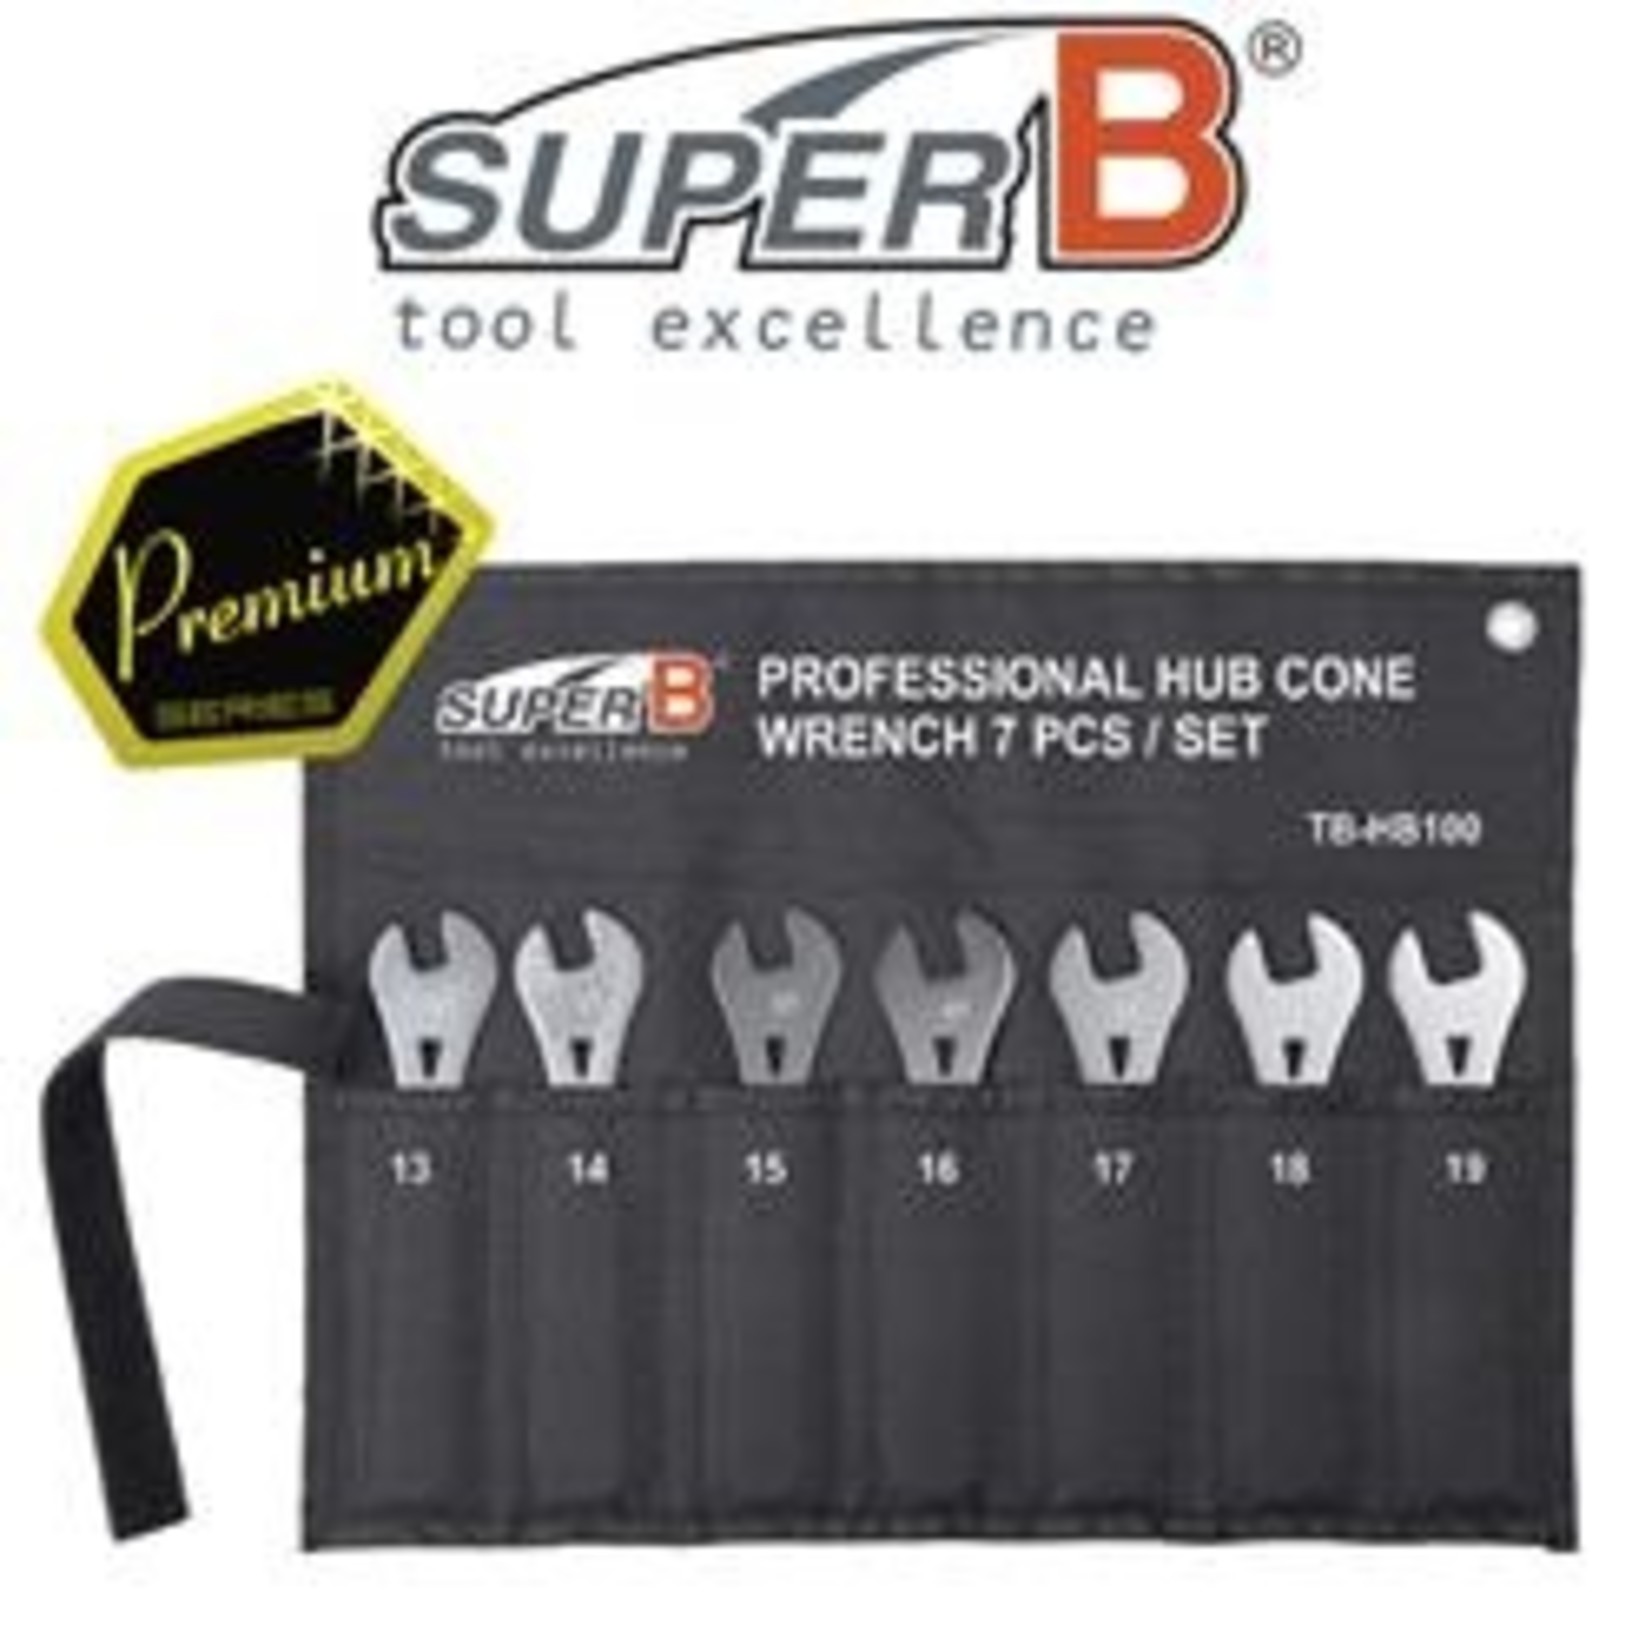 Super B SuperB Professional Hub Cone Wrench Set - Bike Tool Size 13 To 19mm